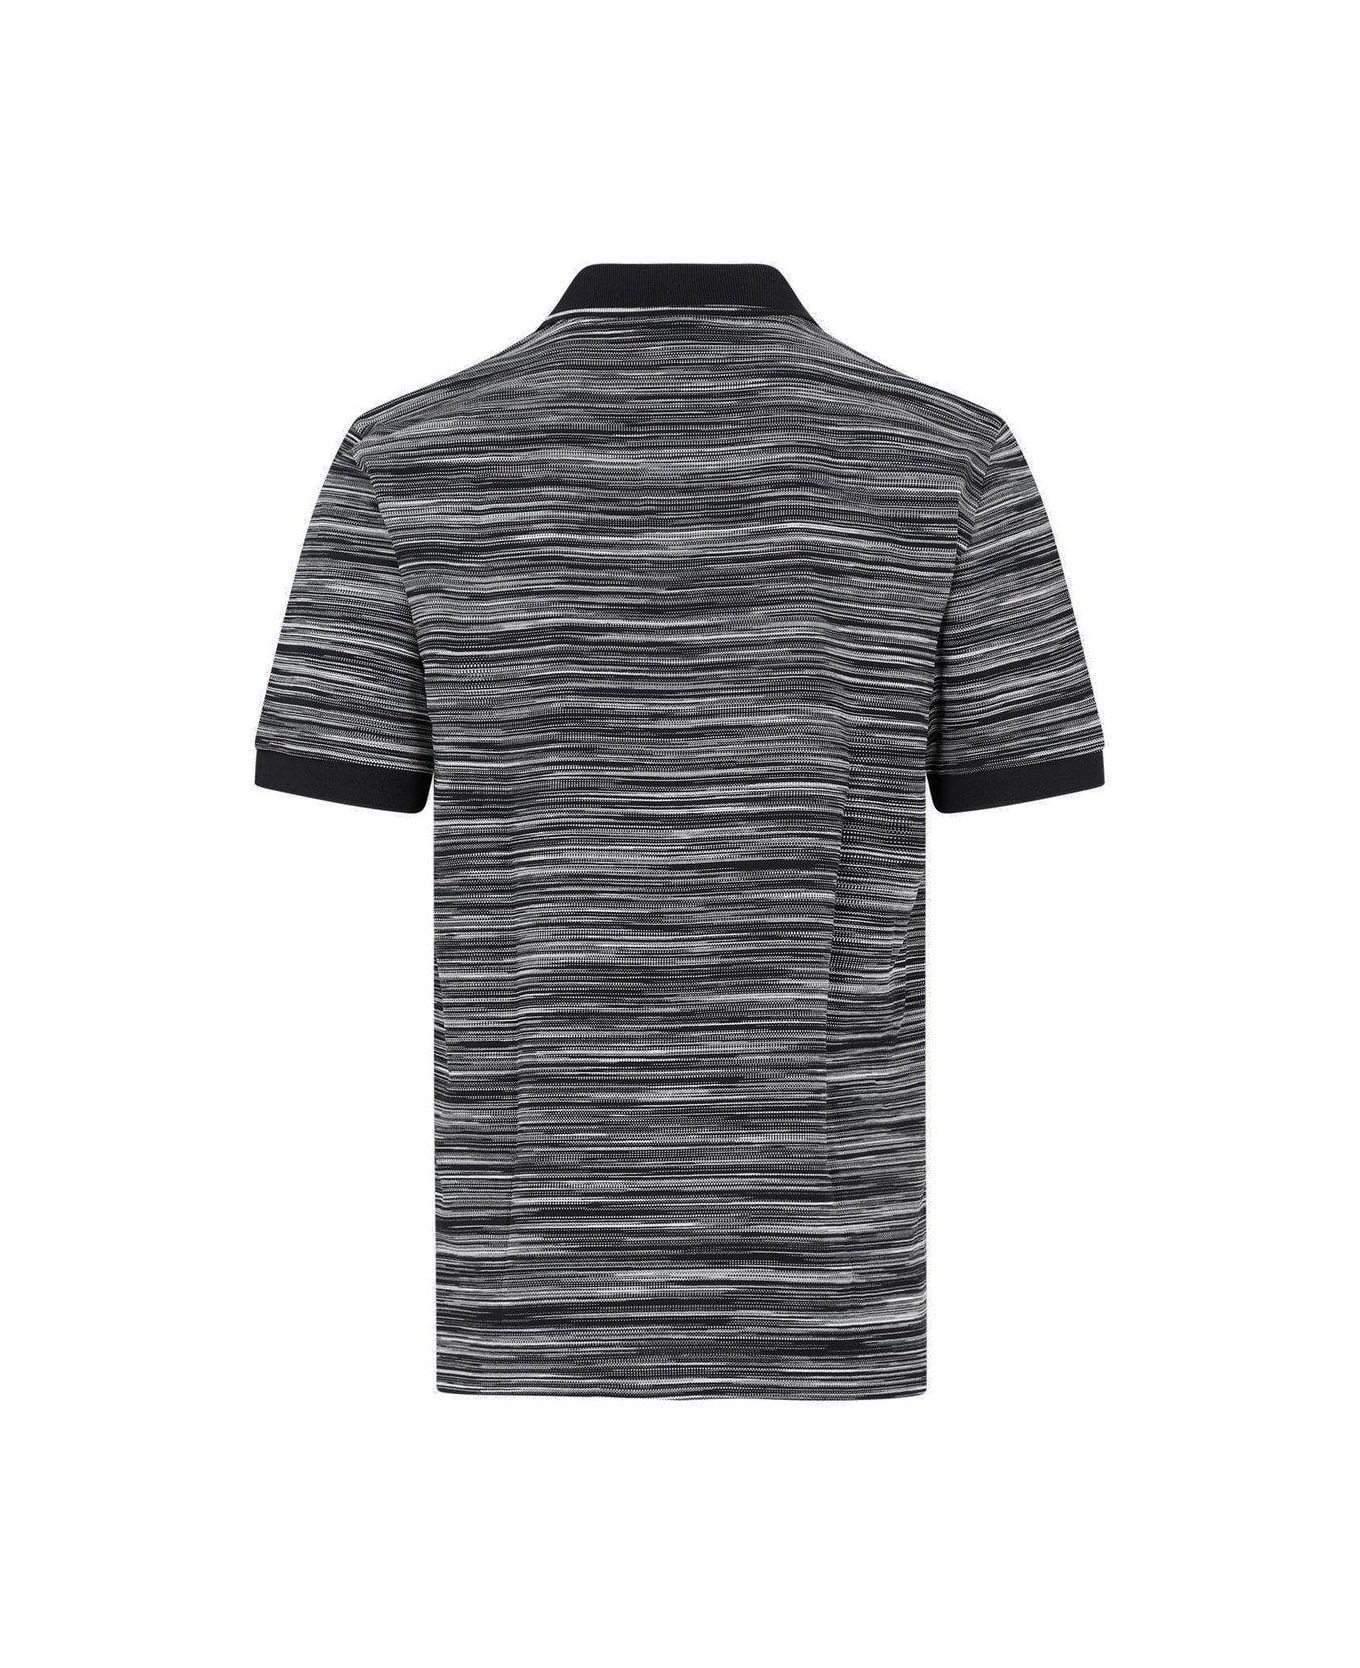 Missoni Classic Collar Shortsleeved Polo Shirt - BLACK/WHITE